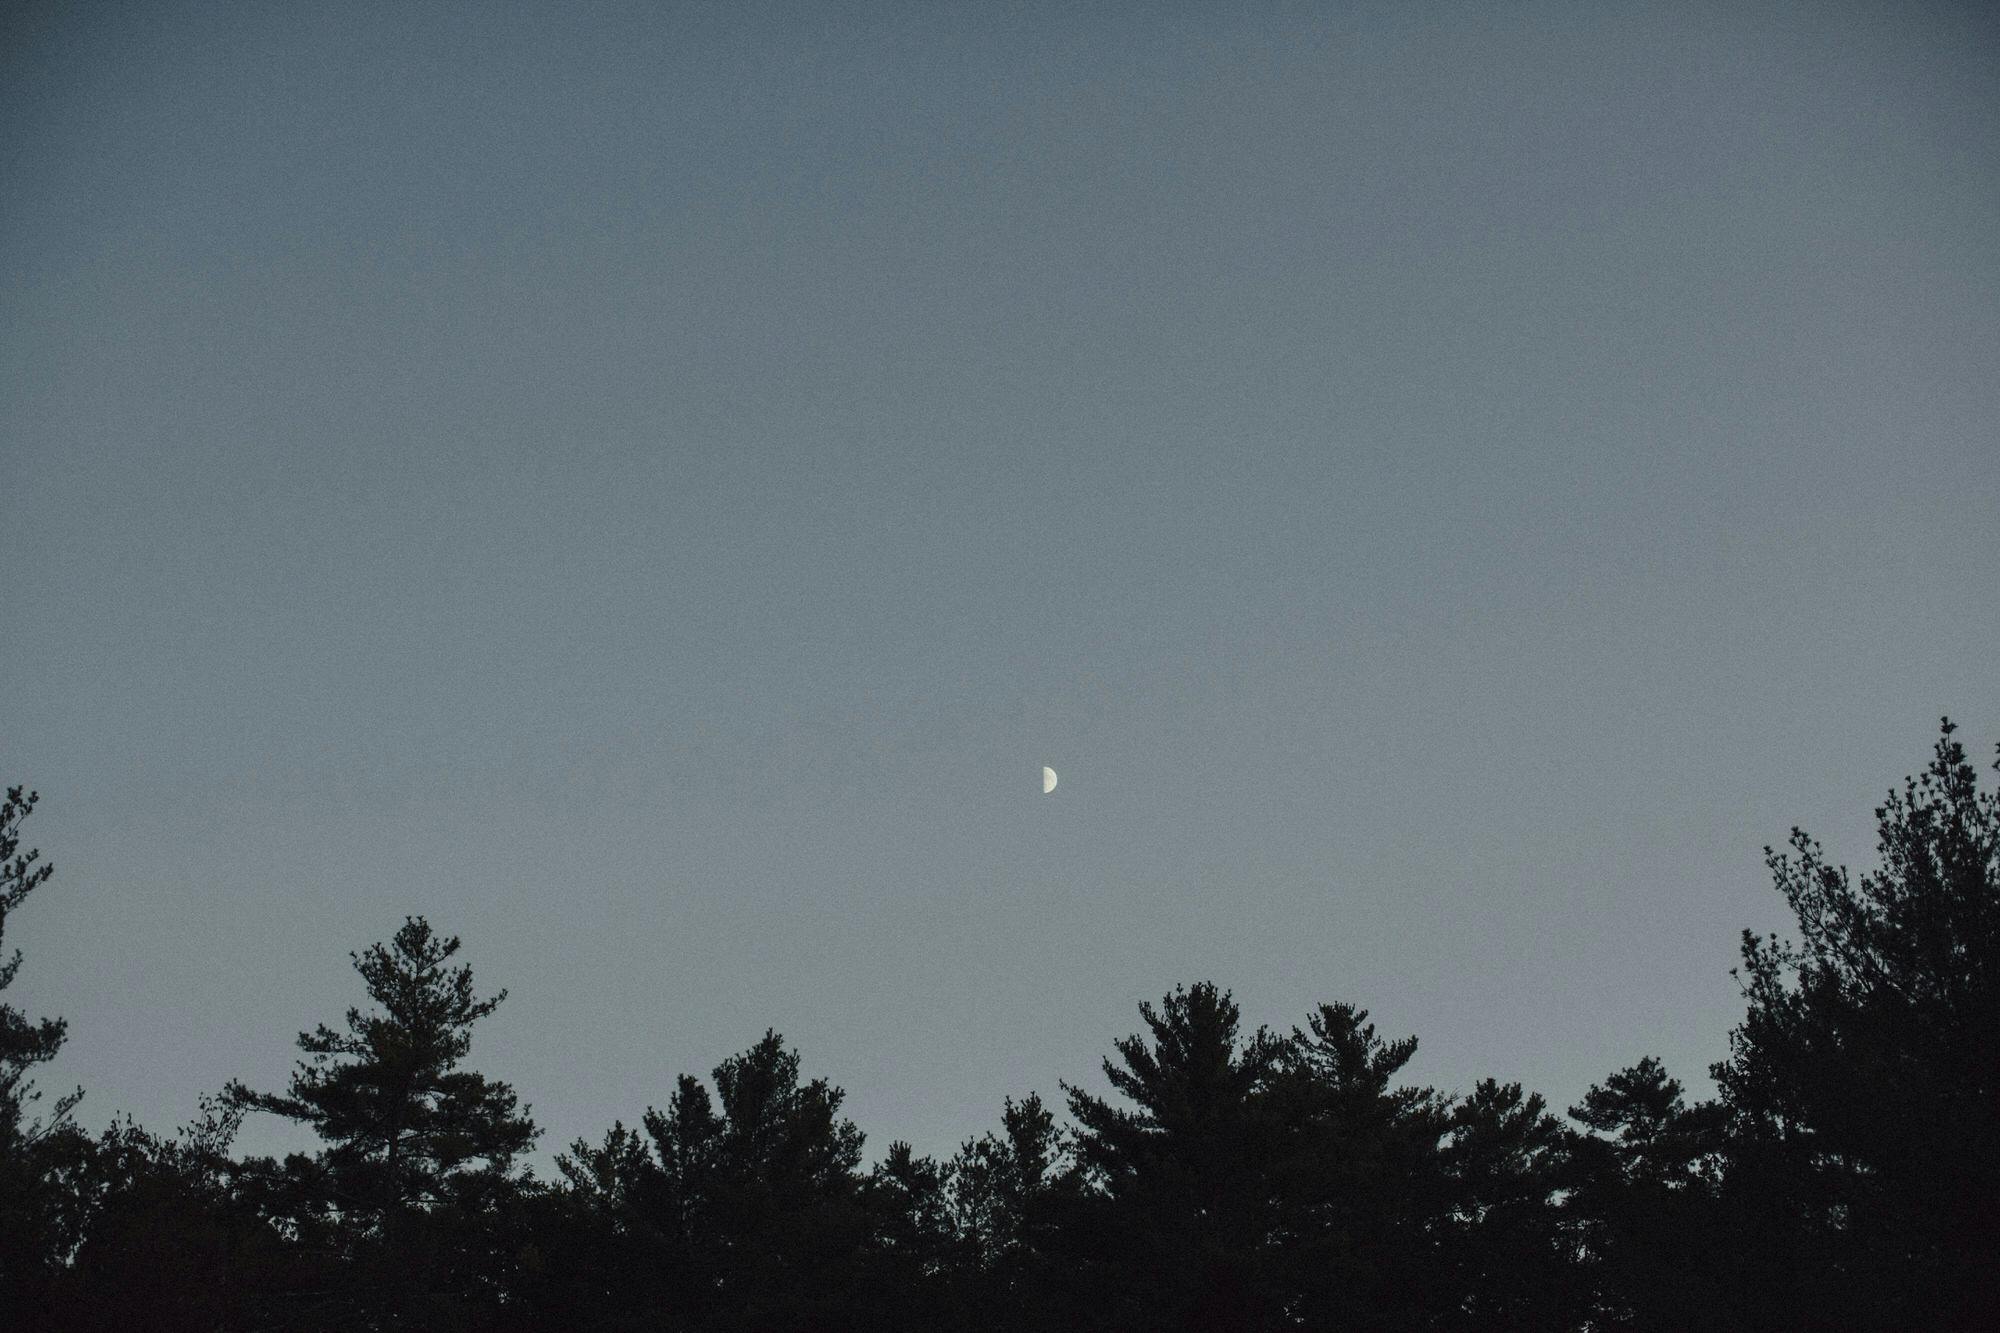 moon at night among the trees